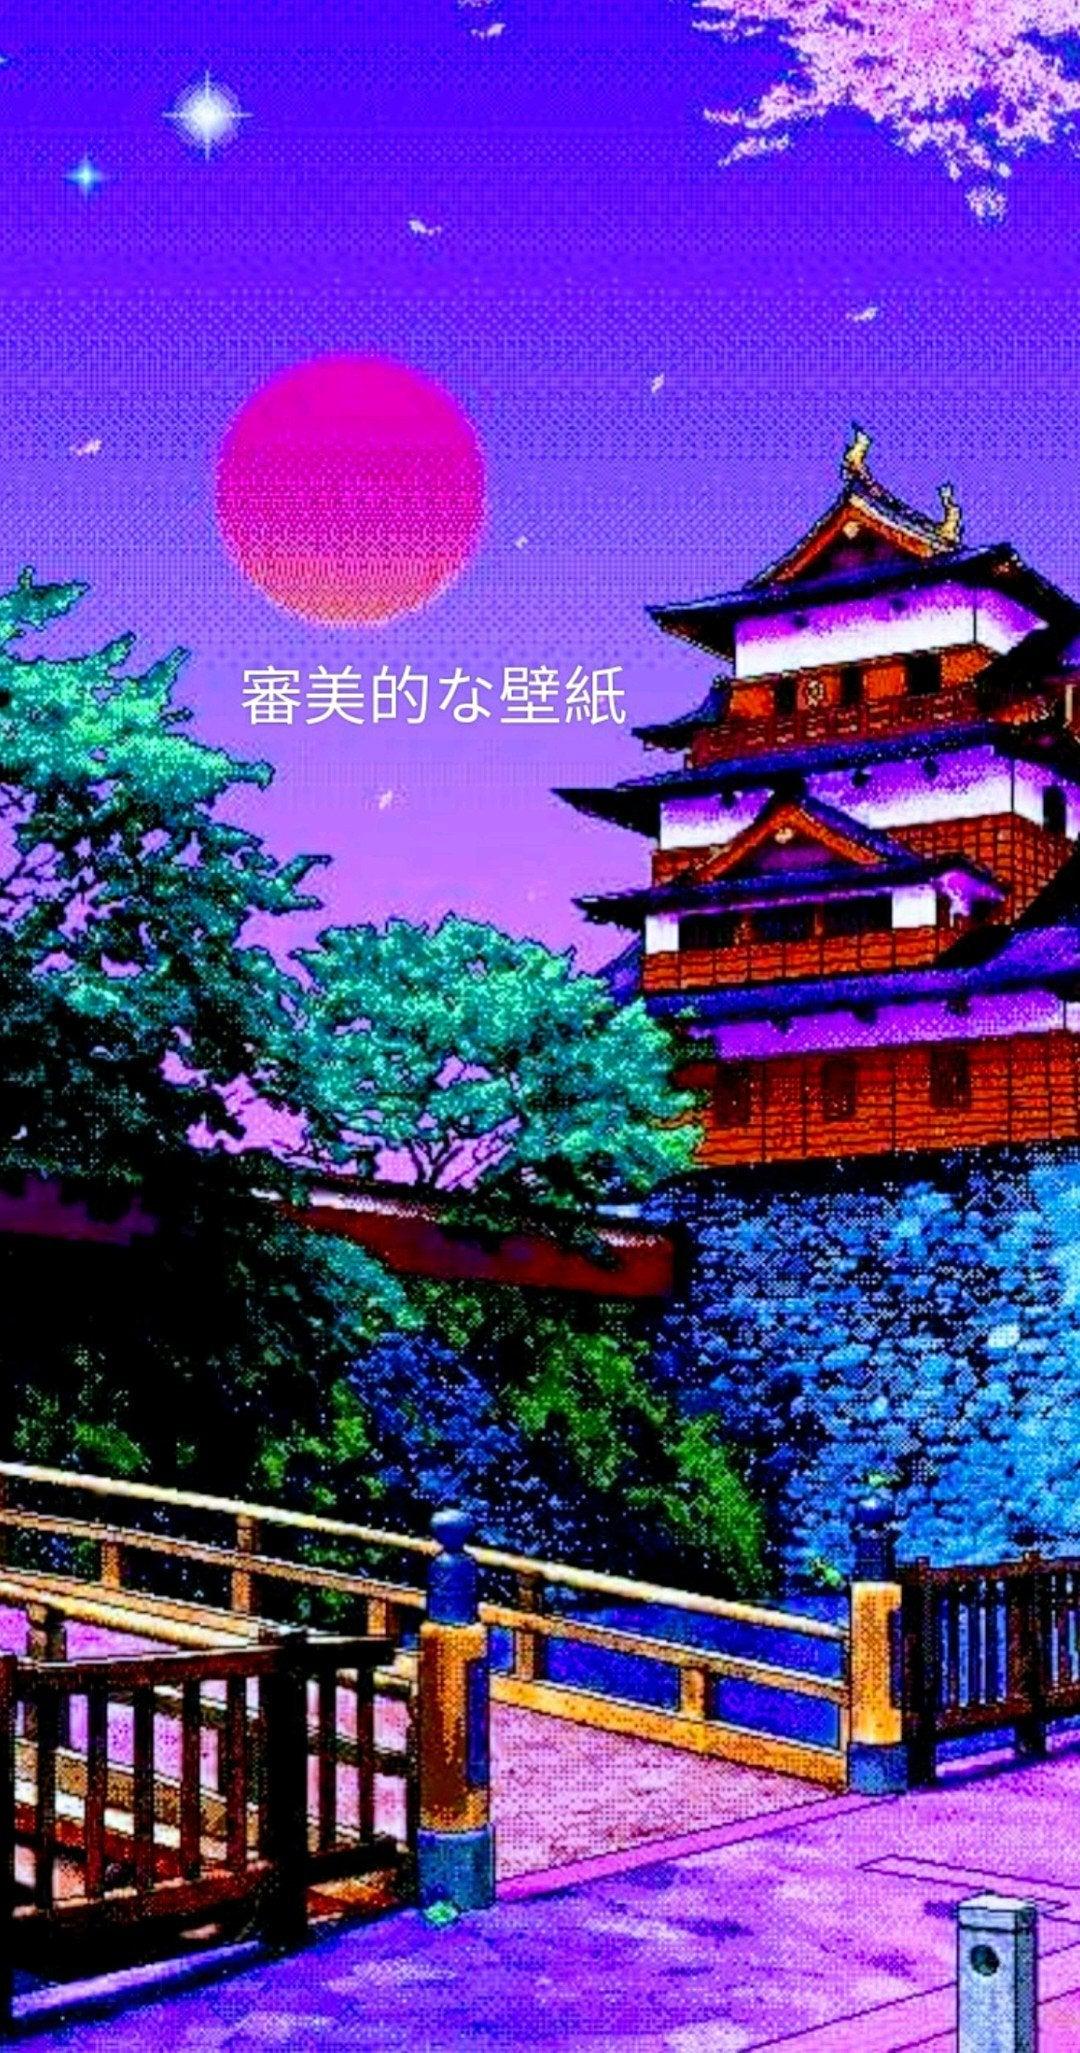 This aesthetic Japanese wallpaper